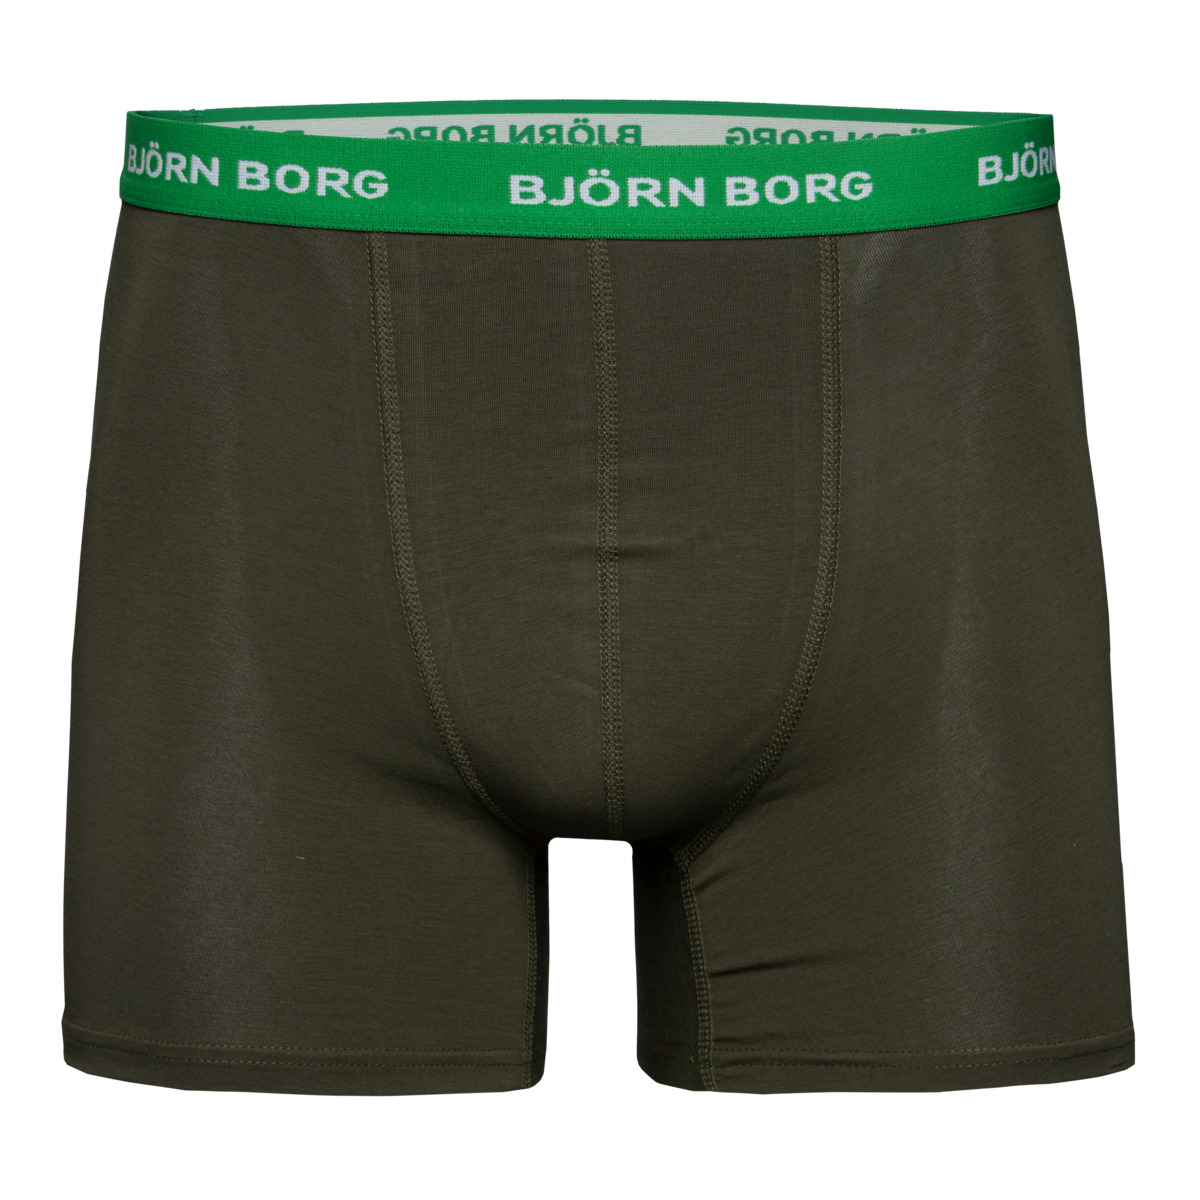 Björn Borg Cotton Stretch Trunk 3er Pack Boxershorts multicolor